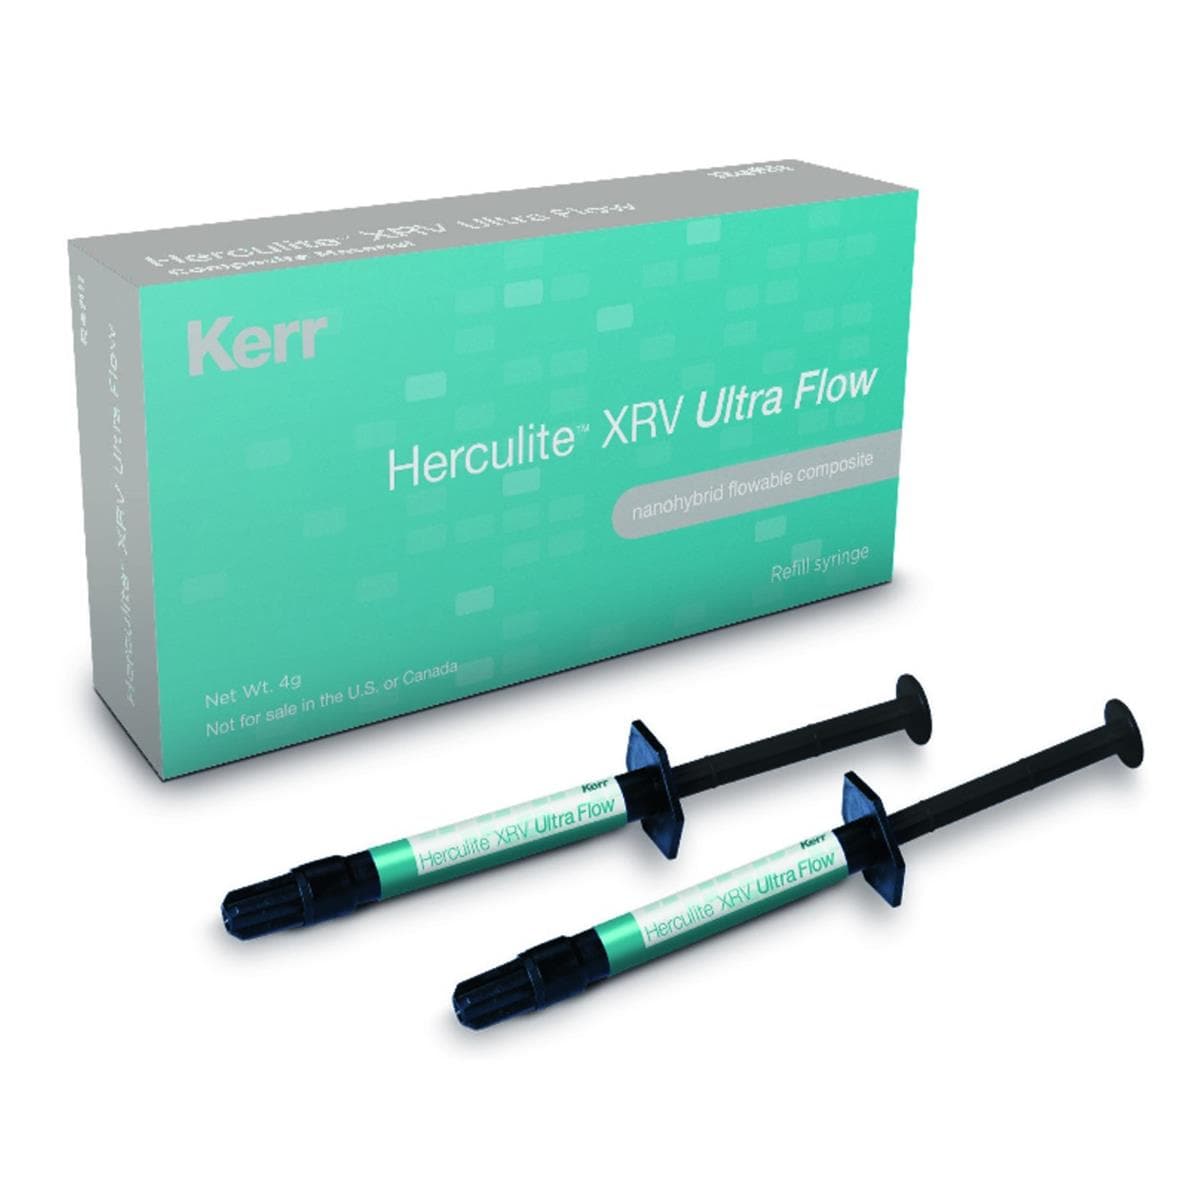 Herculite XRV Ultra Flow KERR - XL2 - Seringue de 2g - Bote de 2